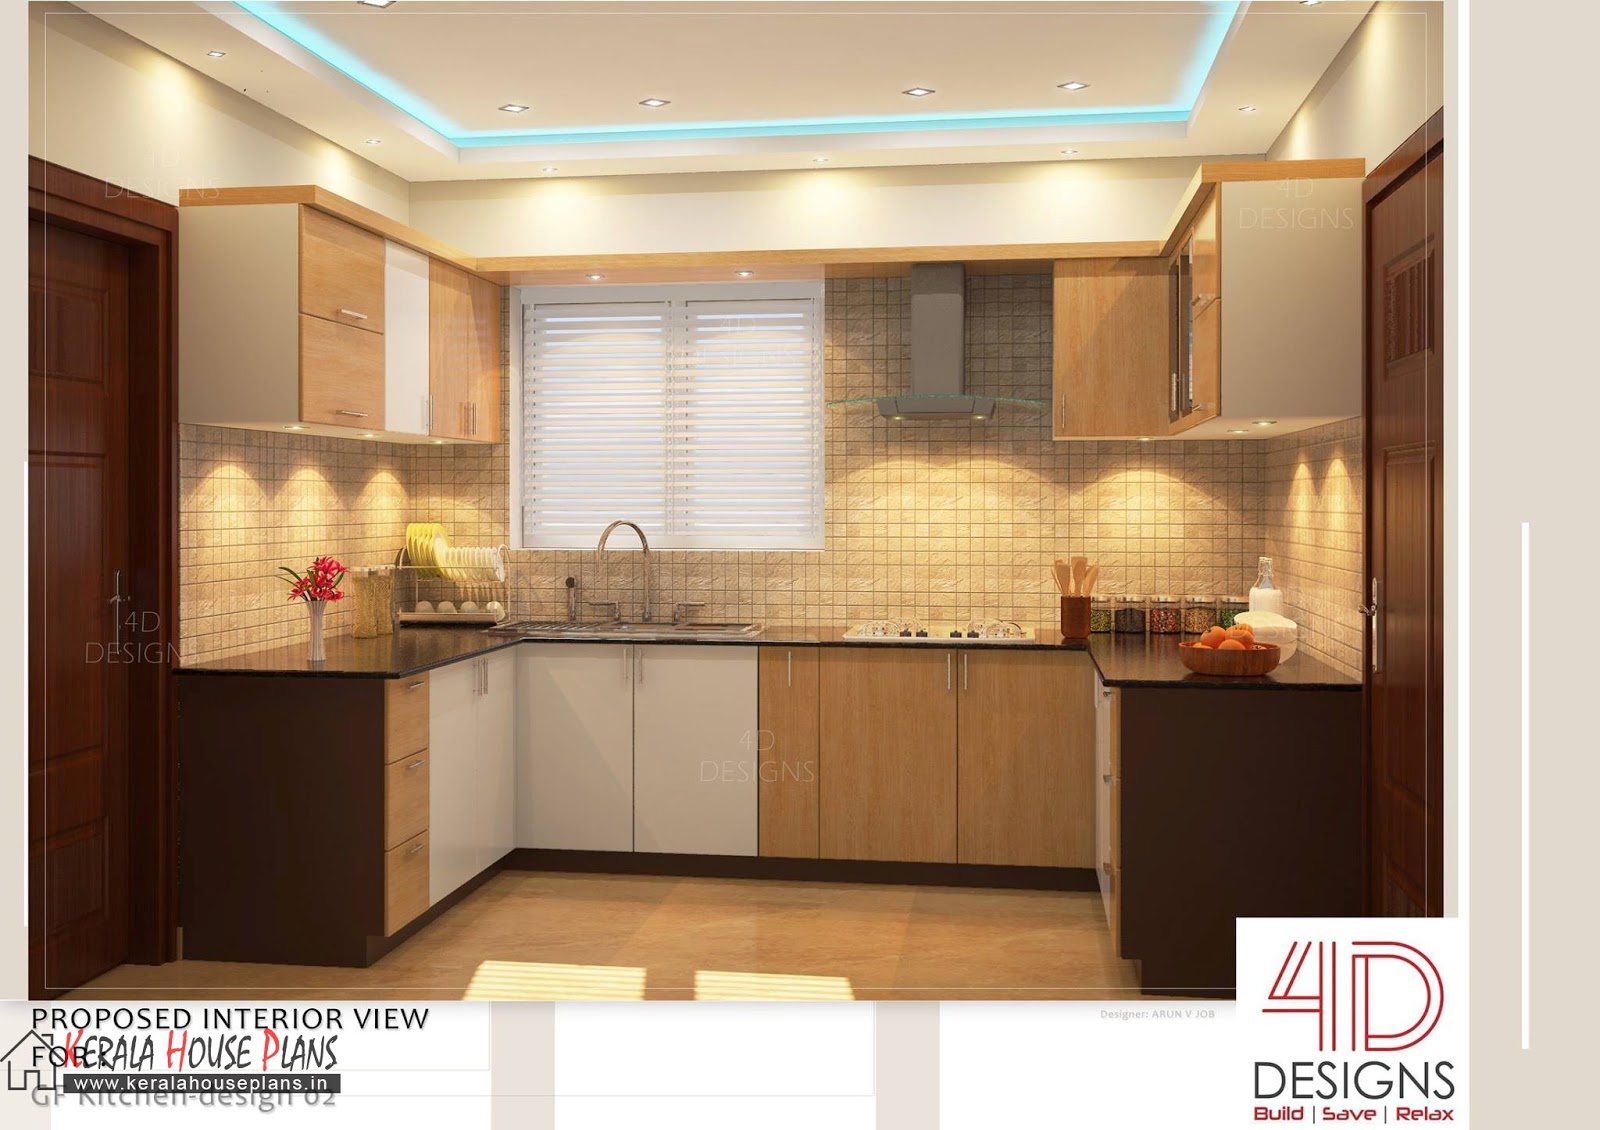 Budget Home Design with Interior Photos modular kitchen